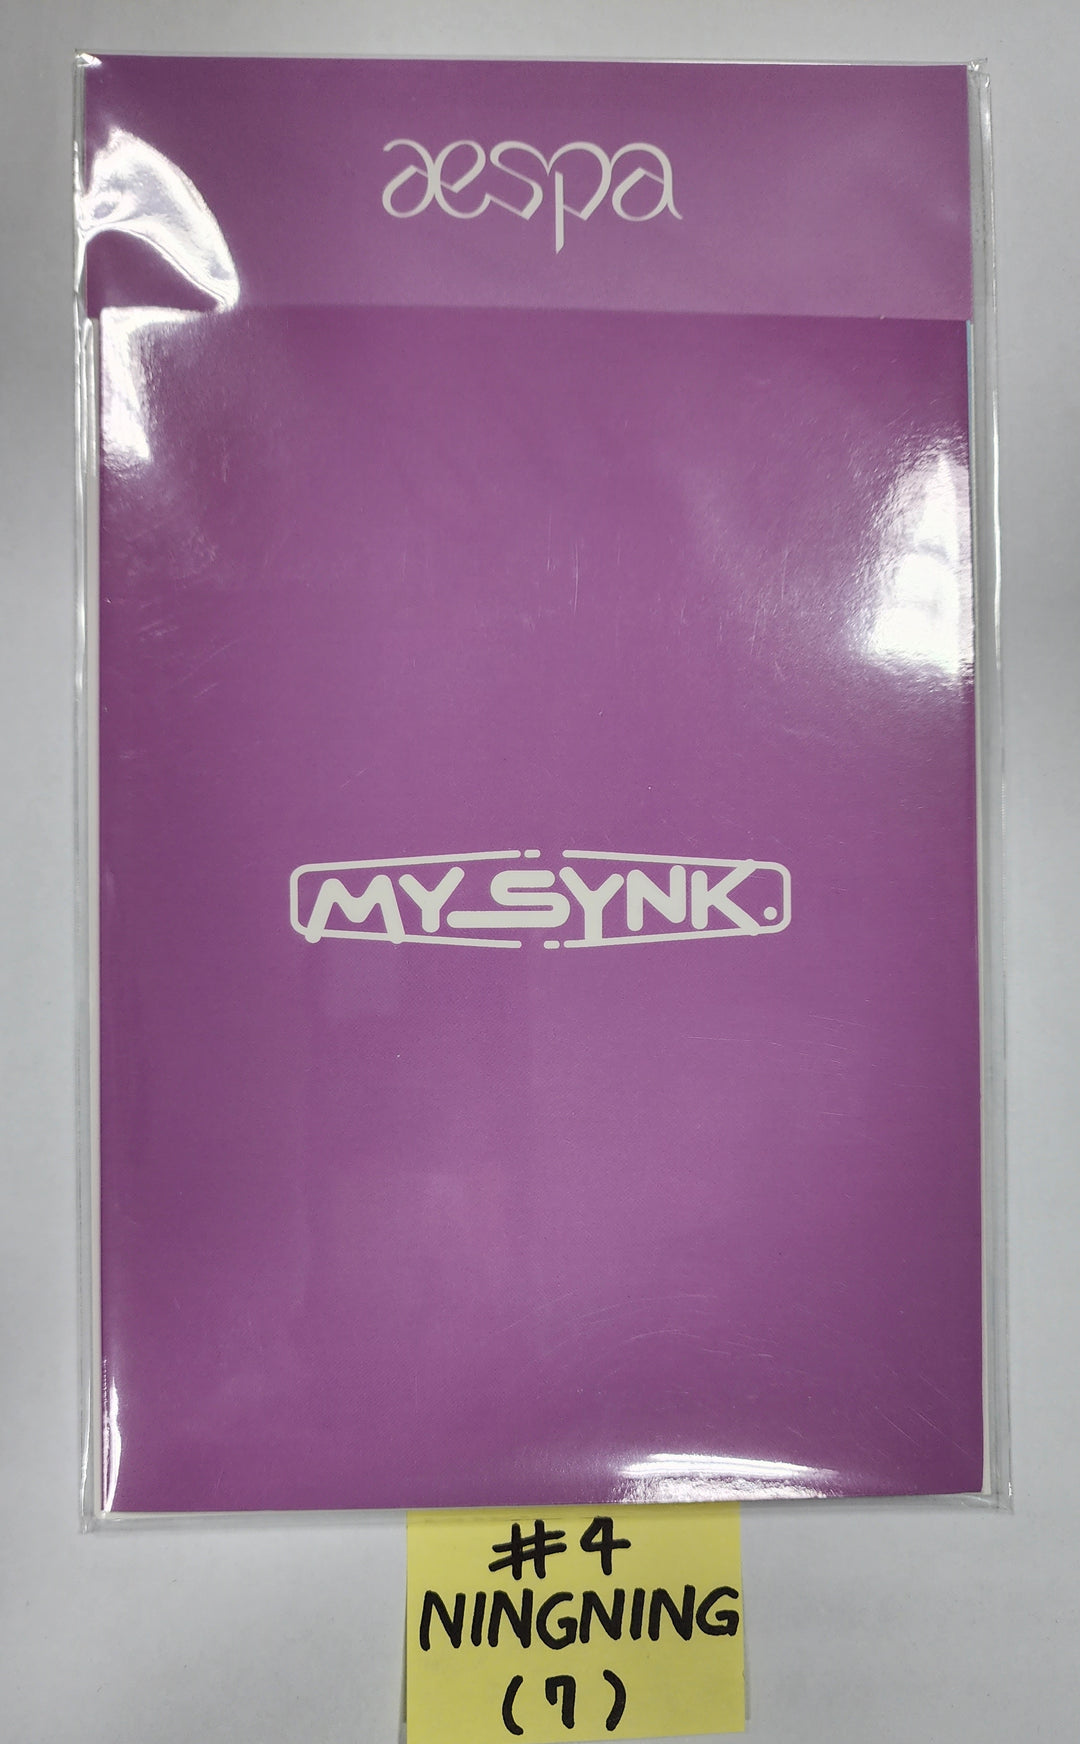 Aespa "Mysynk" - Beyond LIVE "Special AR Ticket SET"